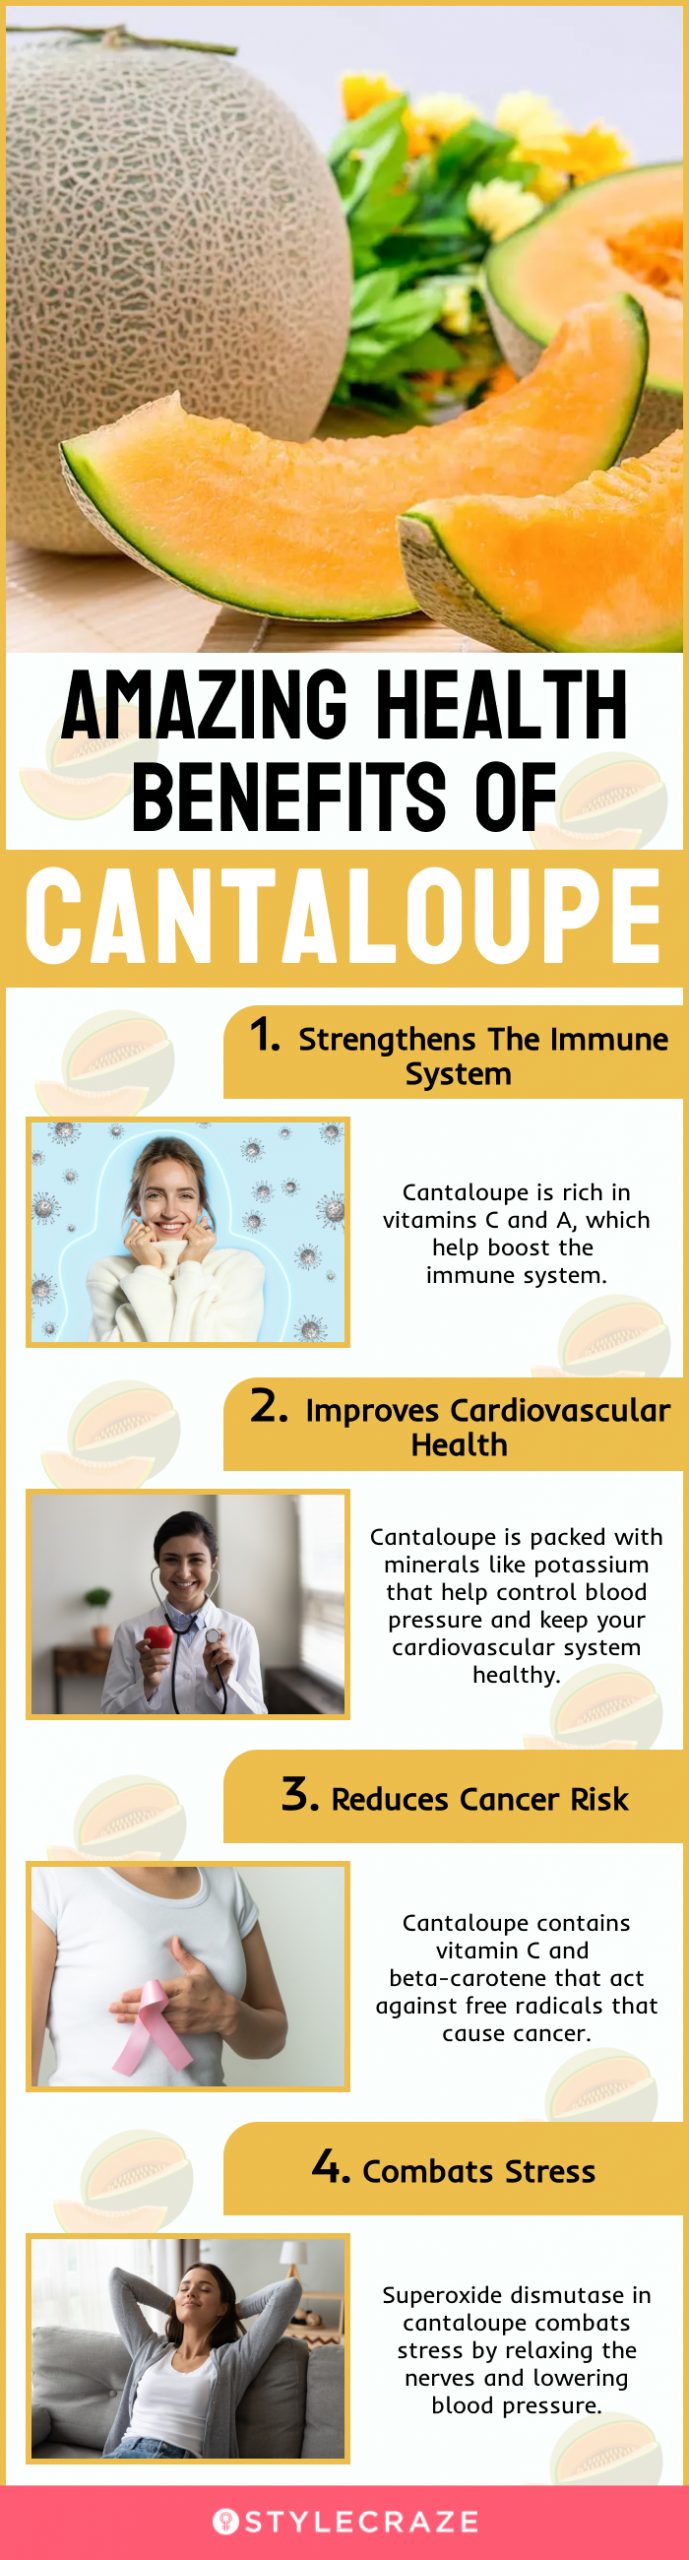 amazing health benefits of cantaloup(infographic)